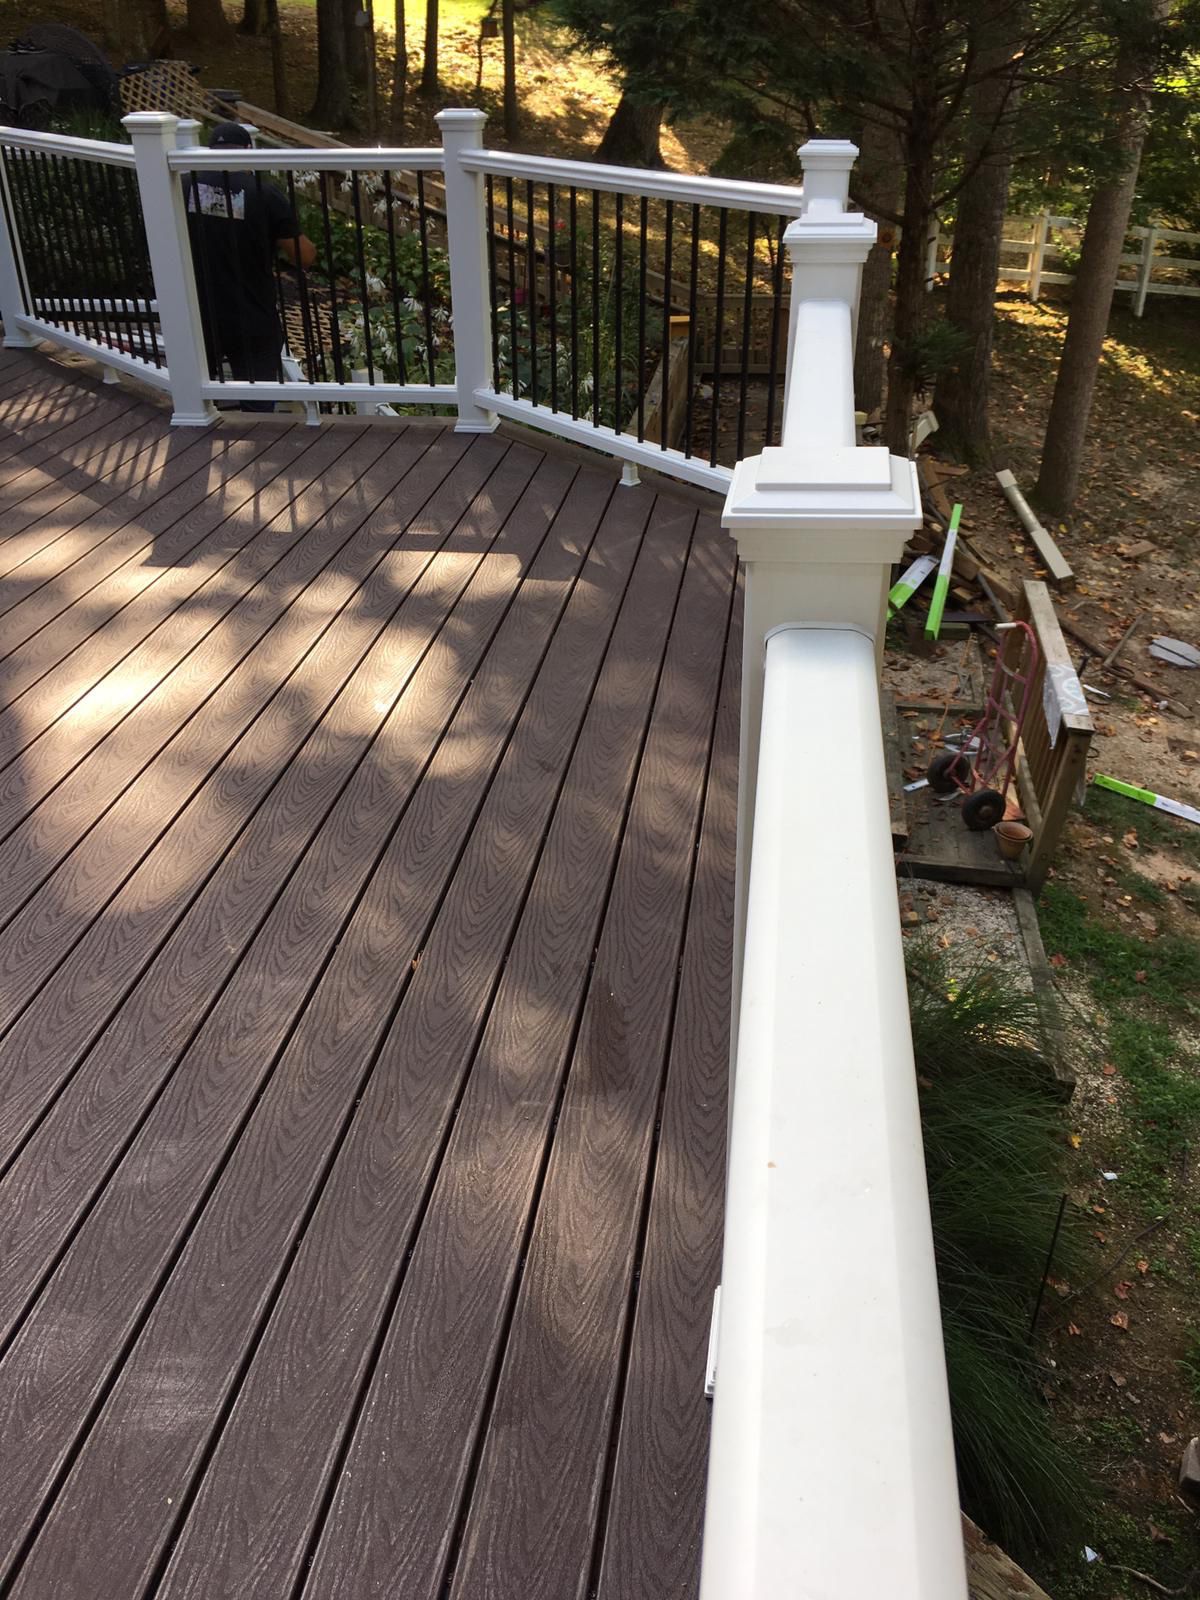 New deck composite and vinyl railings